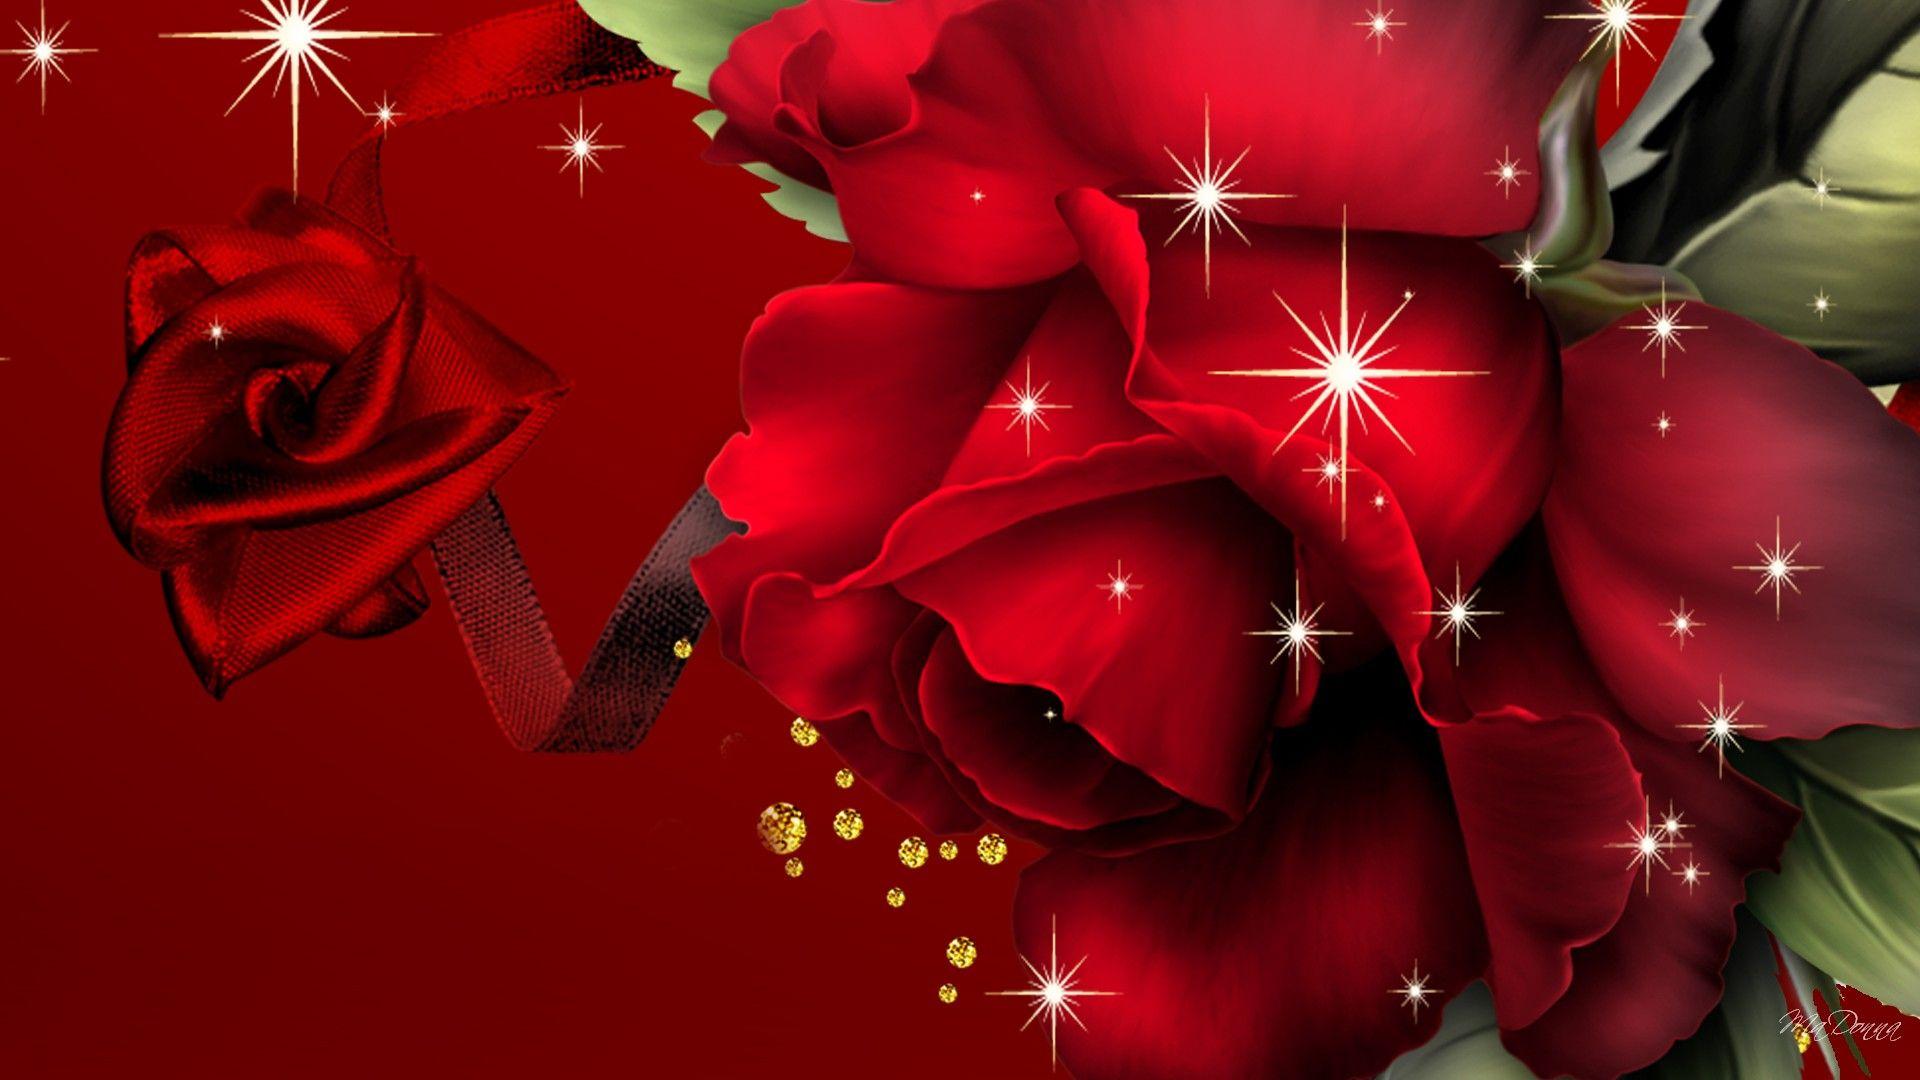 Red Roses Free Wallpaper Hd Top